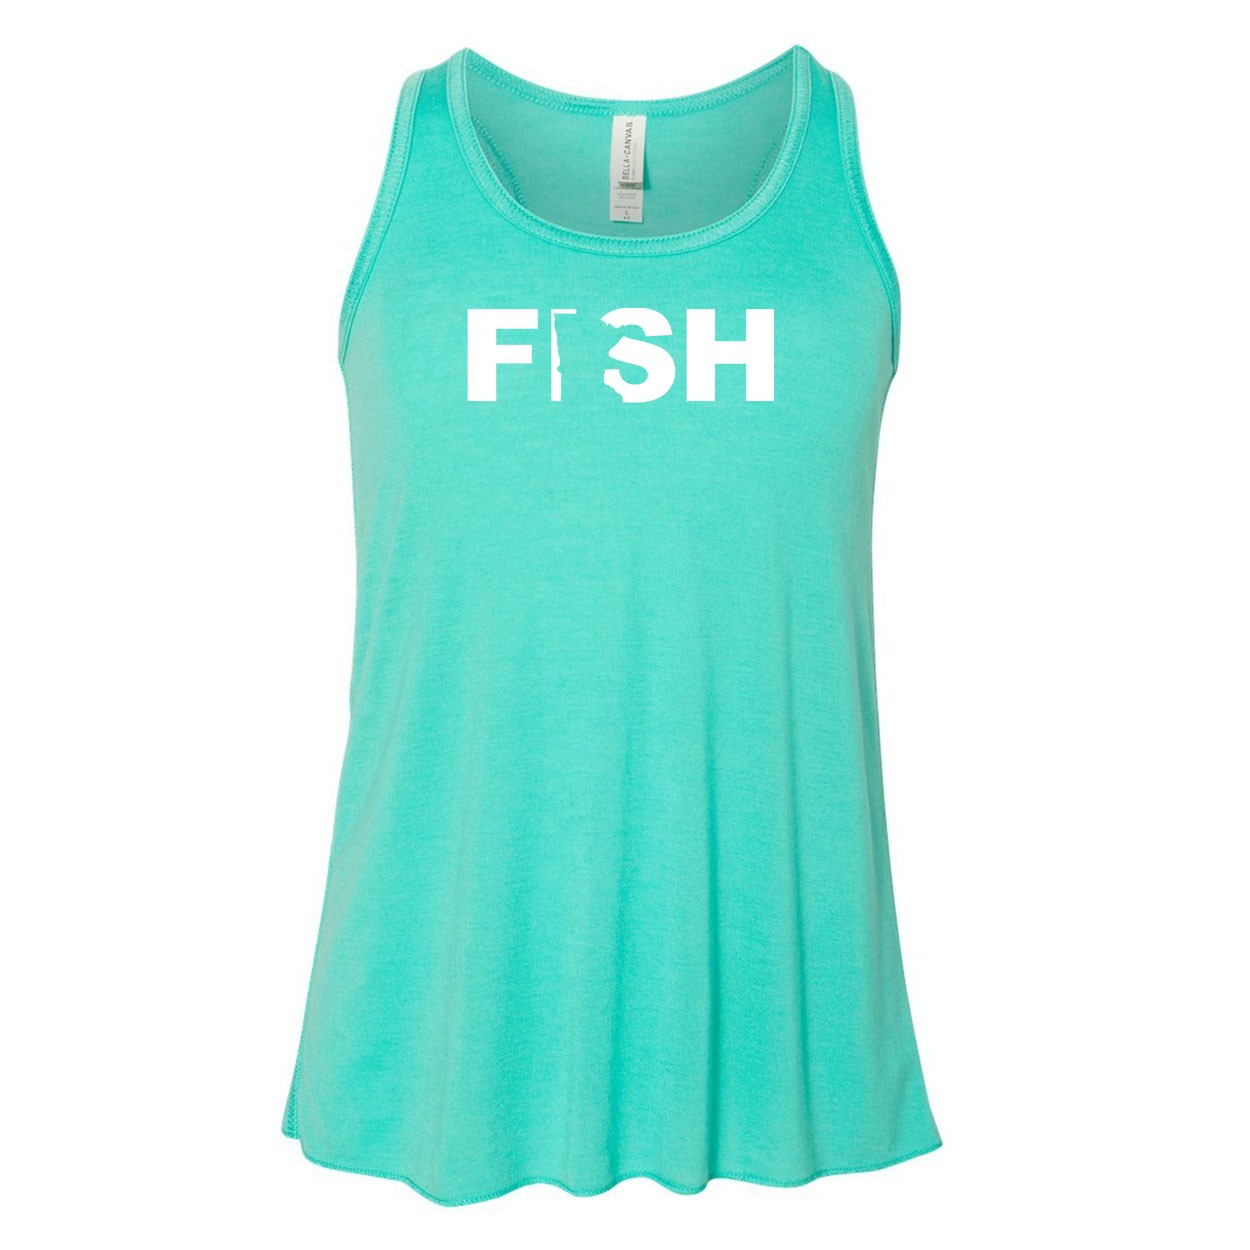 Fish Minnesota Classic Youth Girls Flowy Racerback Tank Top Teal (White Logo)